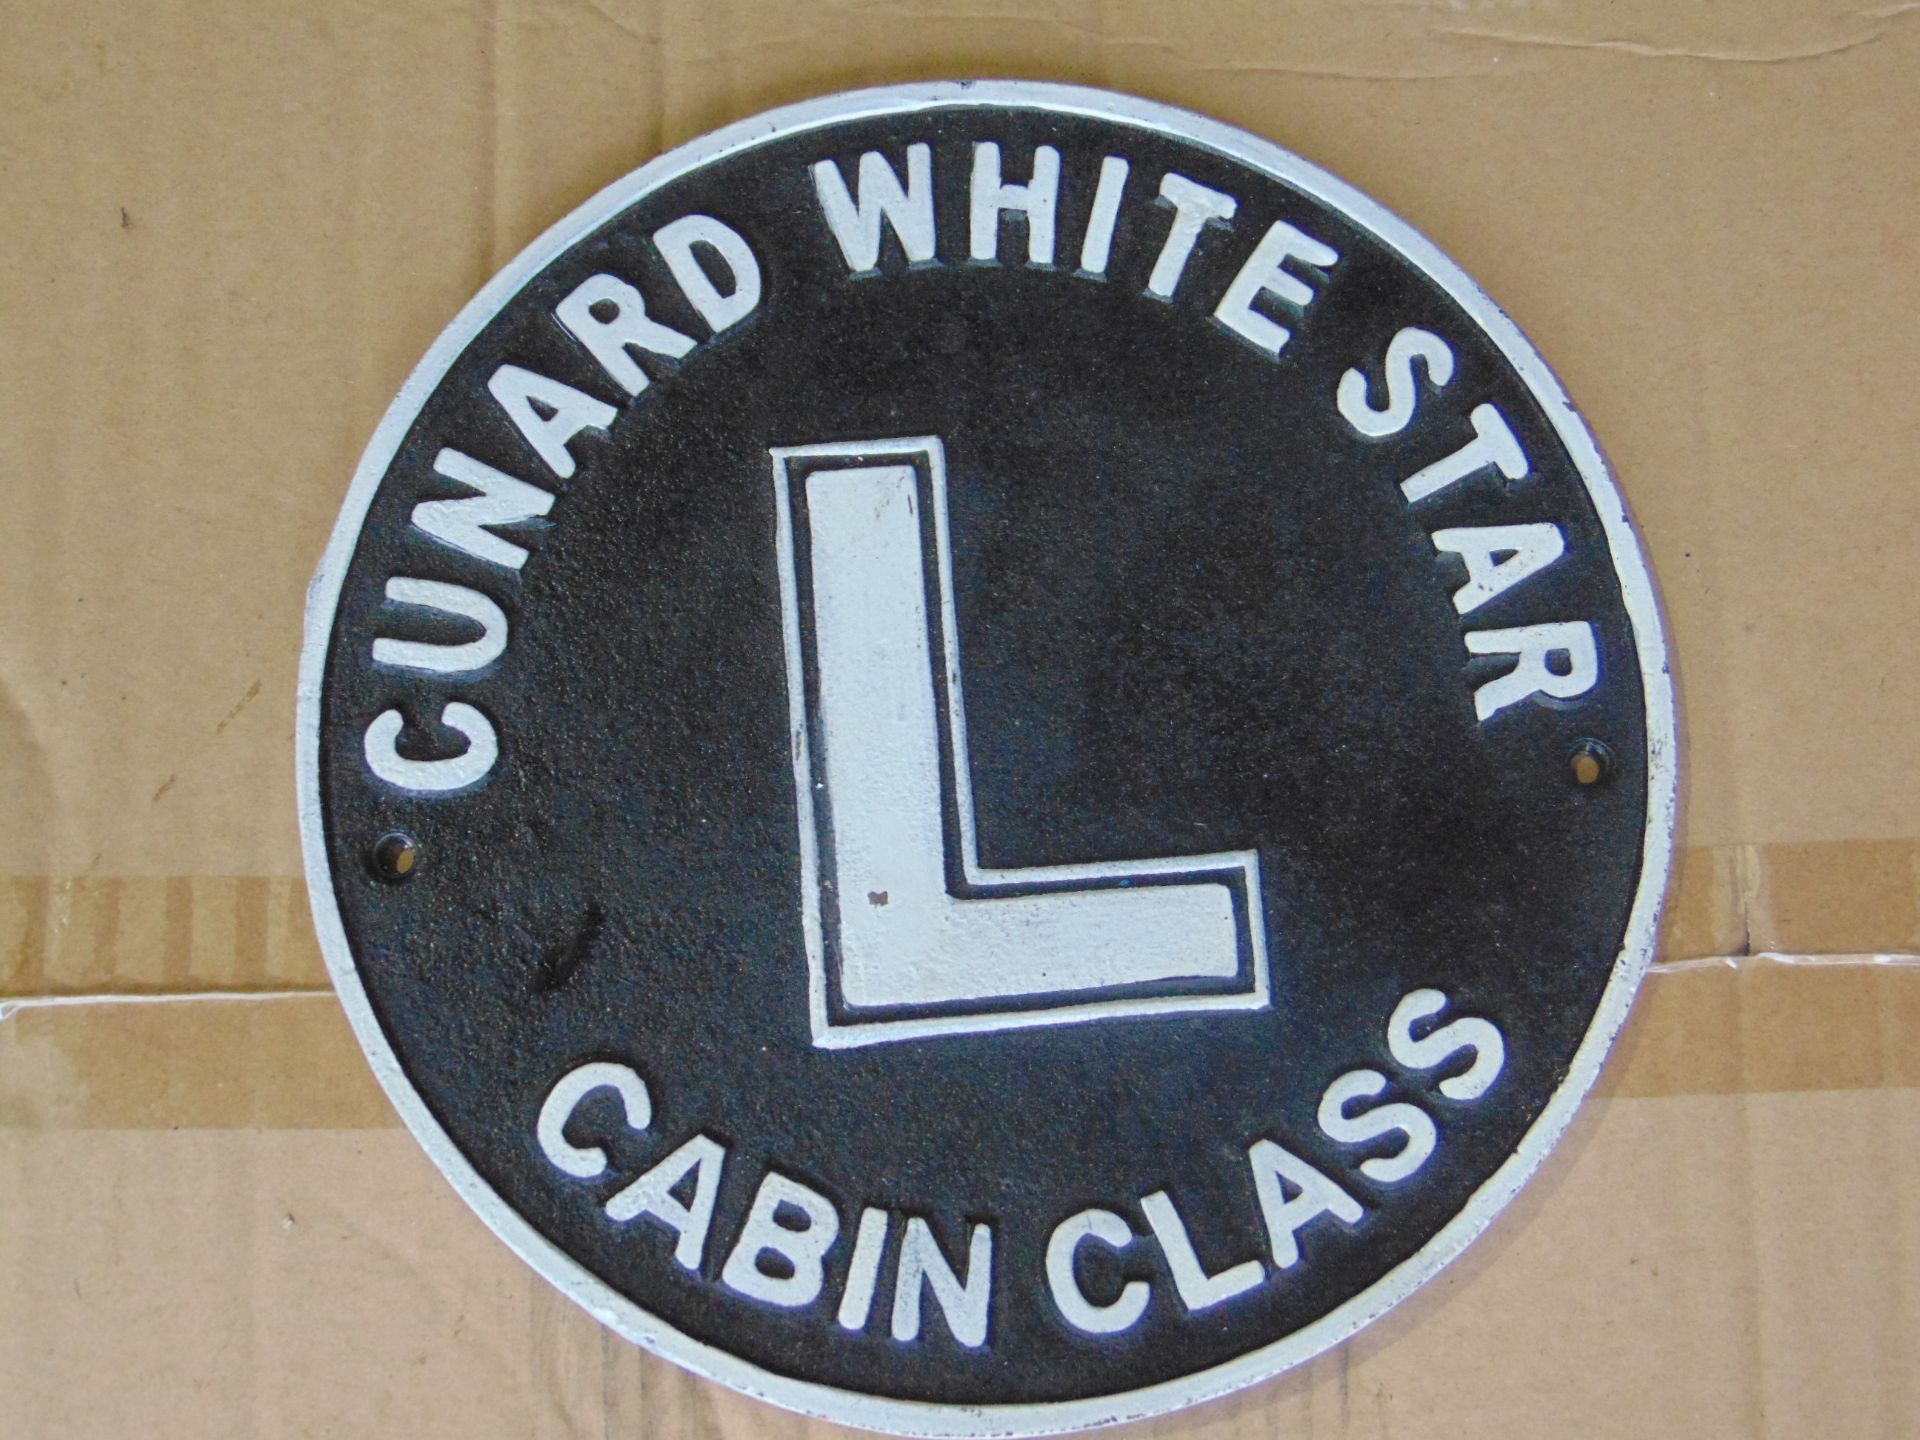 CAST IRON CUNARD WHITE STAR LINE CABIN CLASS PLAQUE (TITANIC) 20 CM DIA - Image 3 of 4